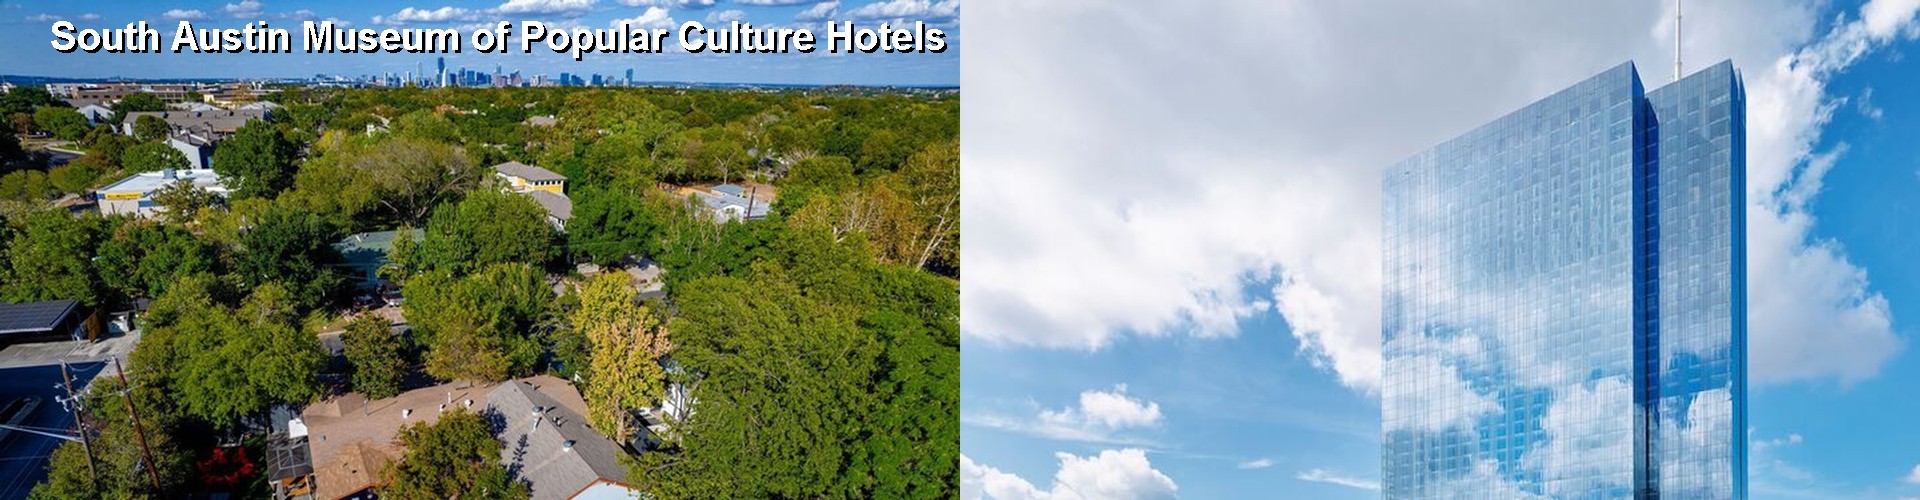 3 Best Hotels near South Austin Museum of Popular Culture